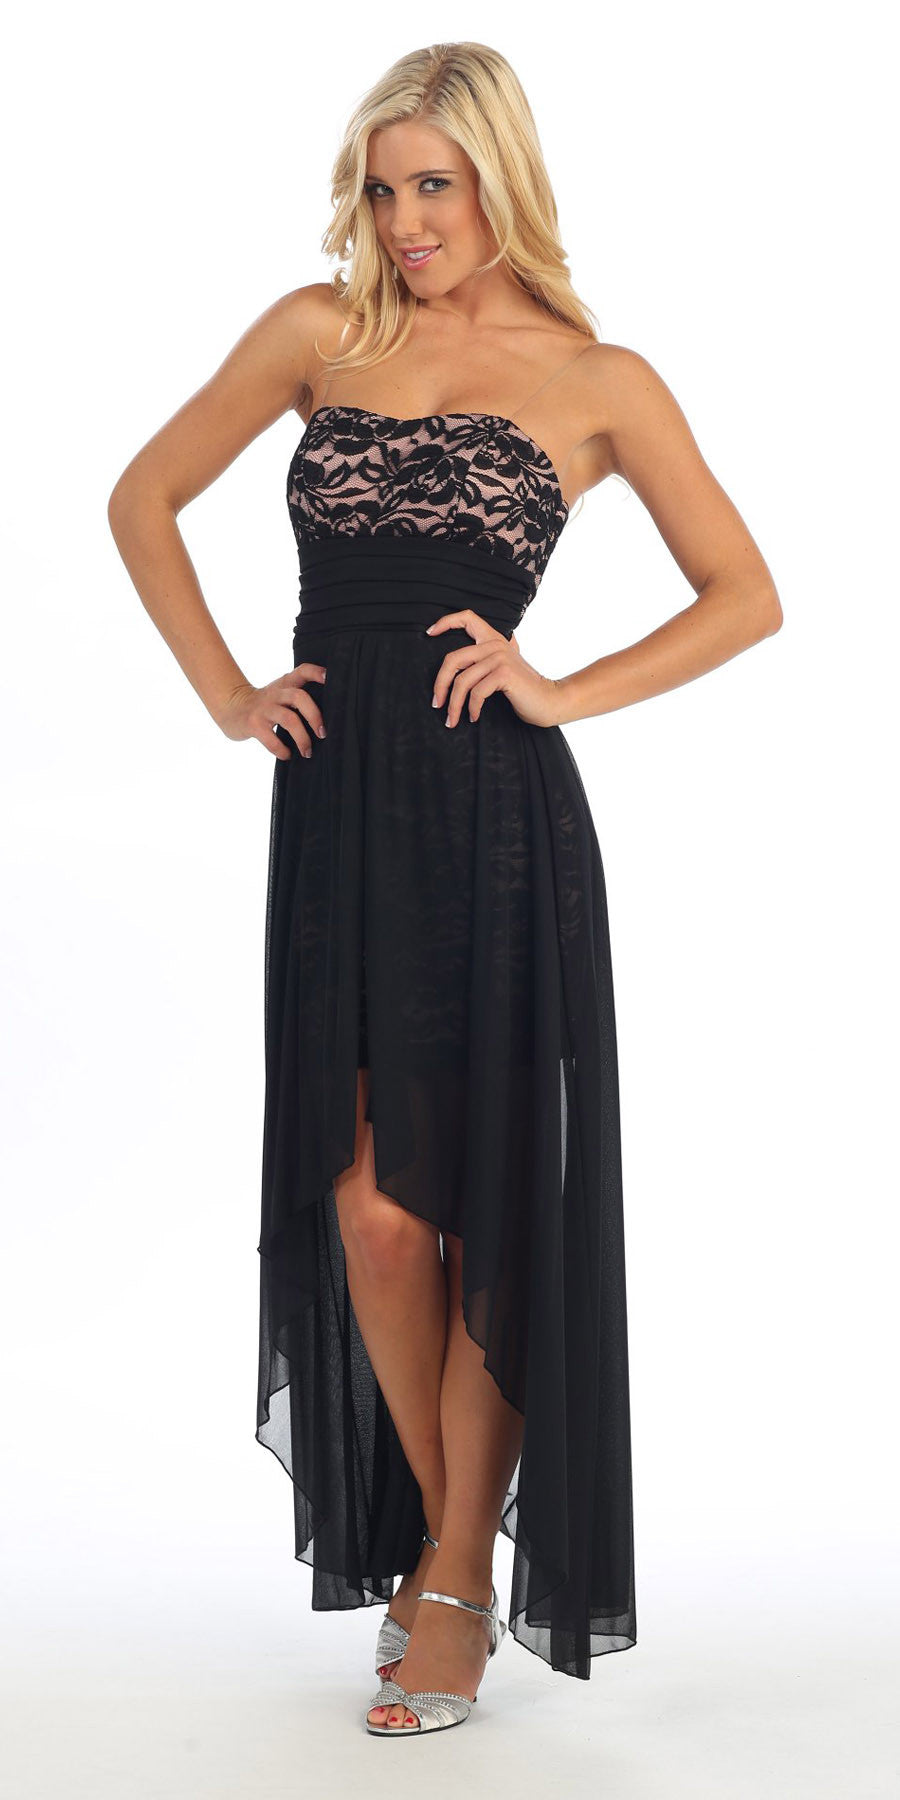 Black/Peach High Low Semi Formal Dress Chiffon/Lace Strapless Neck